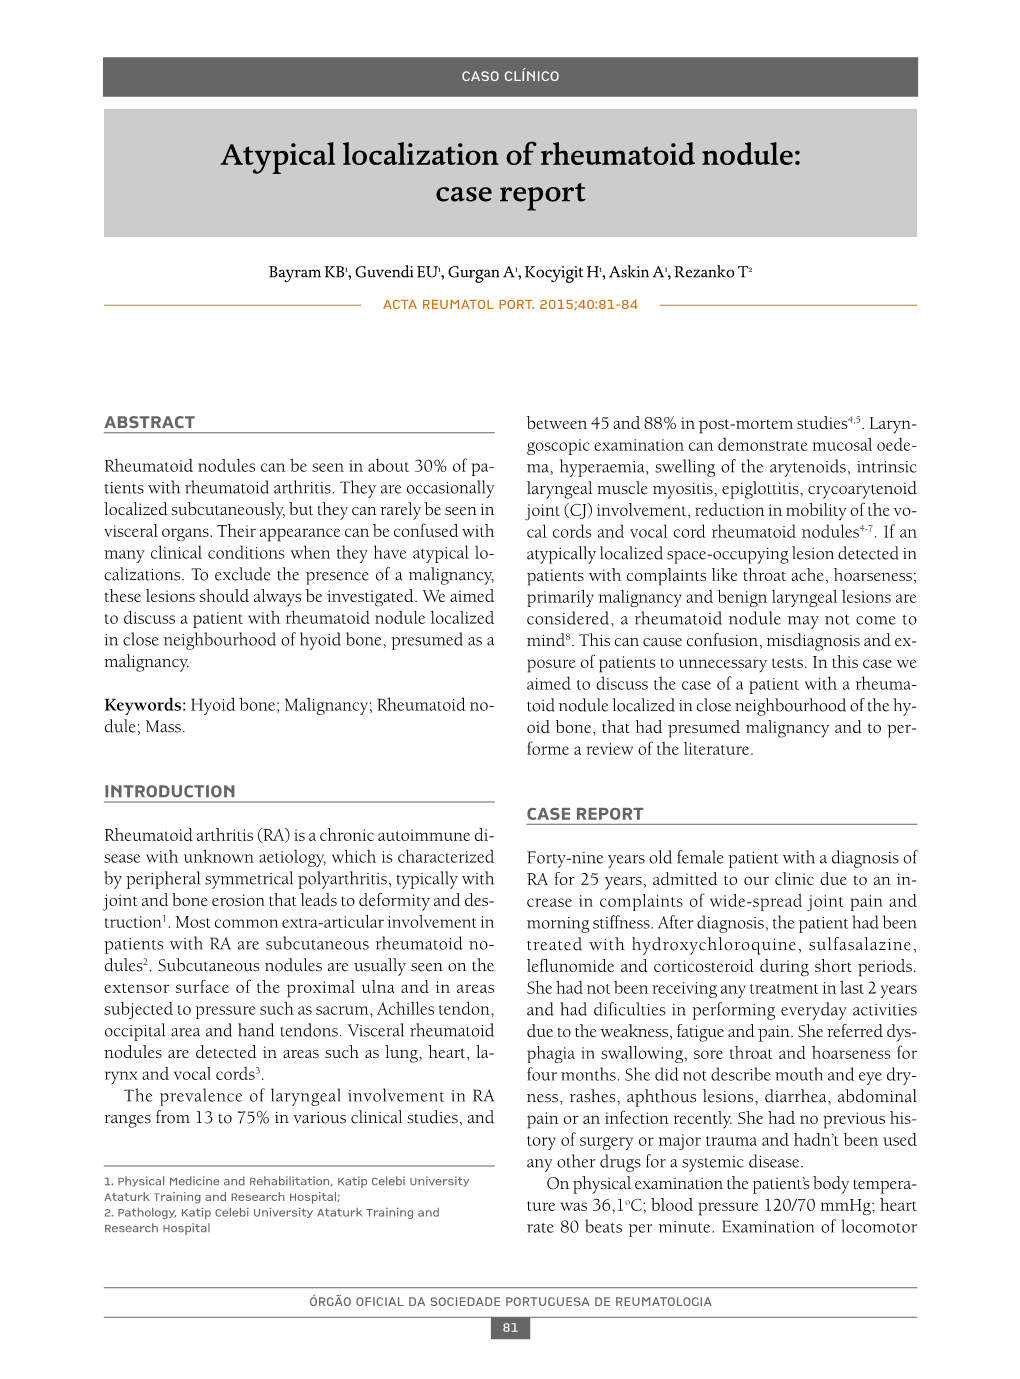 Atypical Localization of Rheumatoid Nodule: Case Report